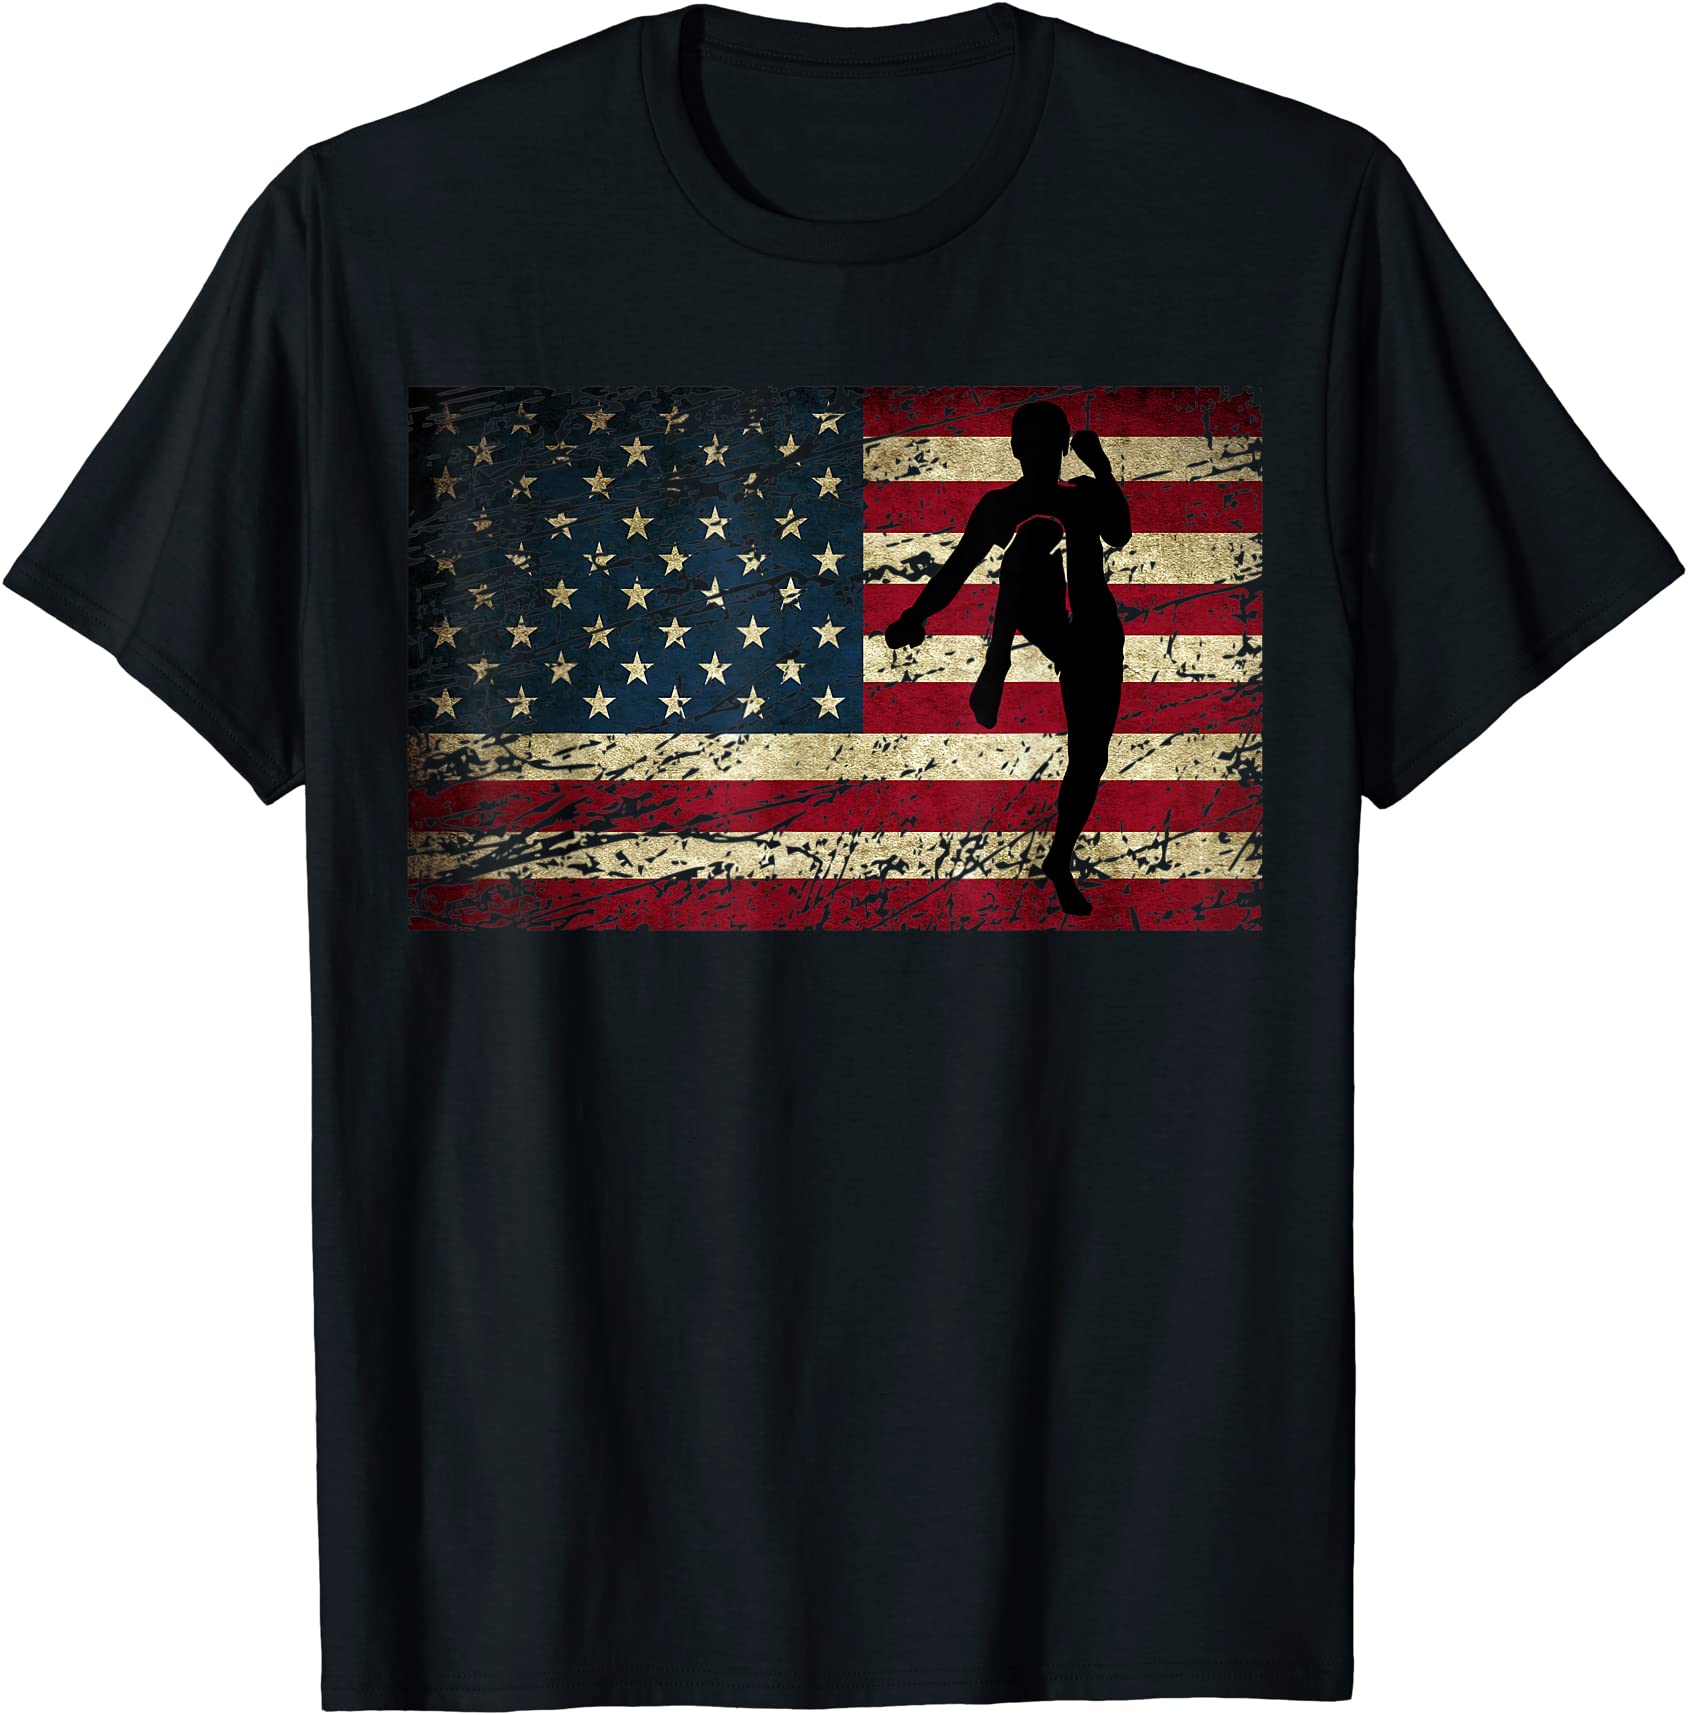 american flag kickboxing shirt kick boxing shirt karate tee men - Buy t ...